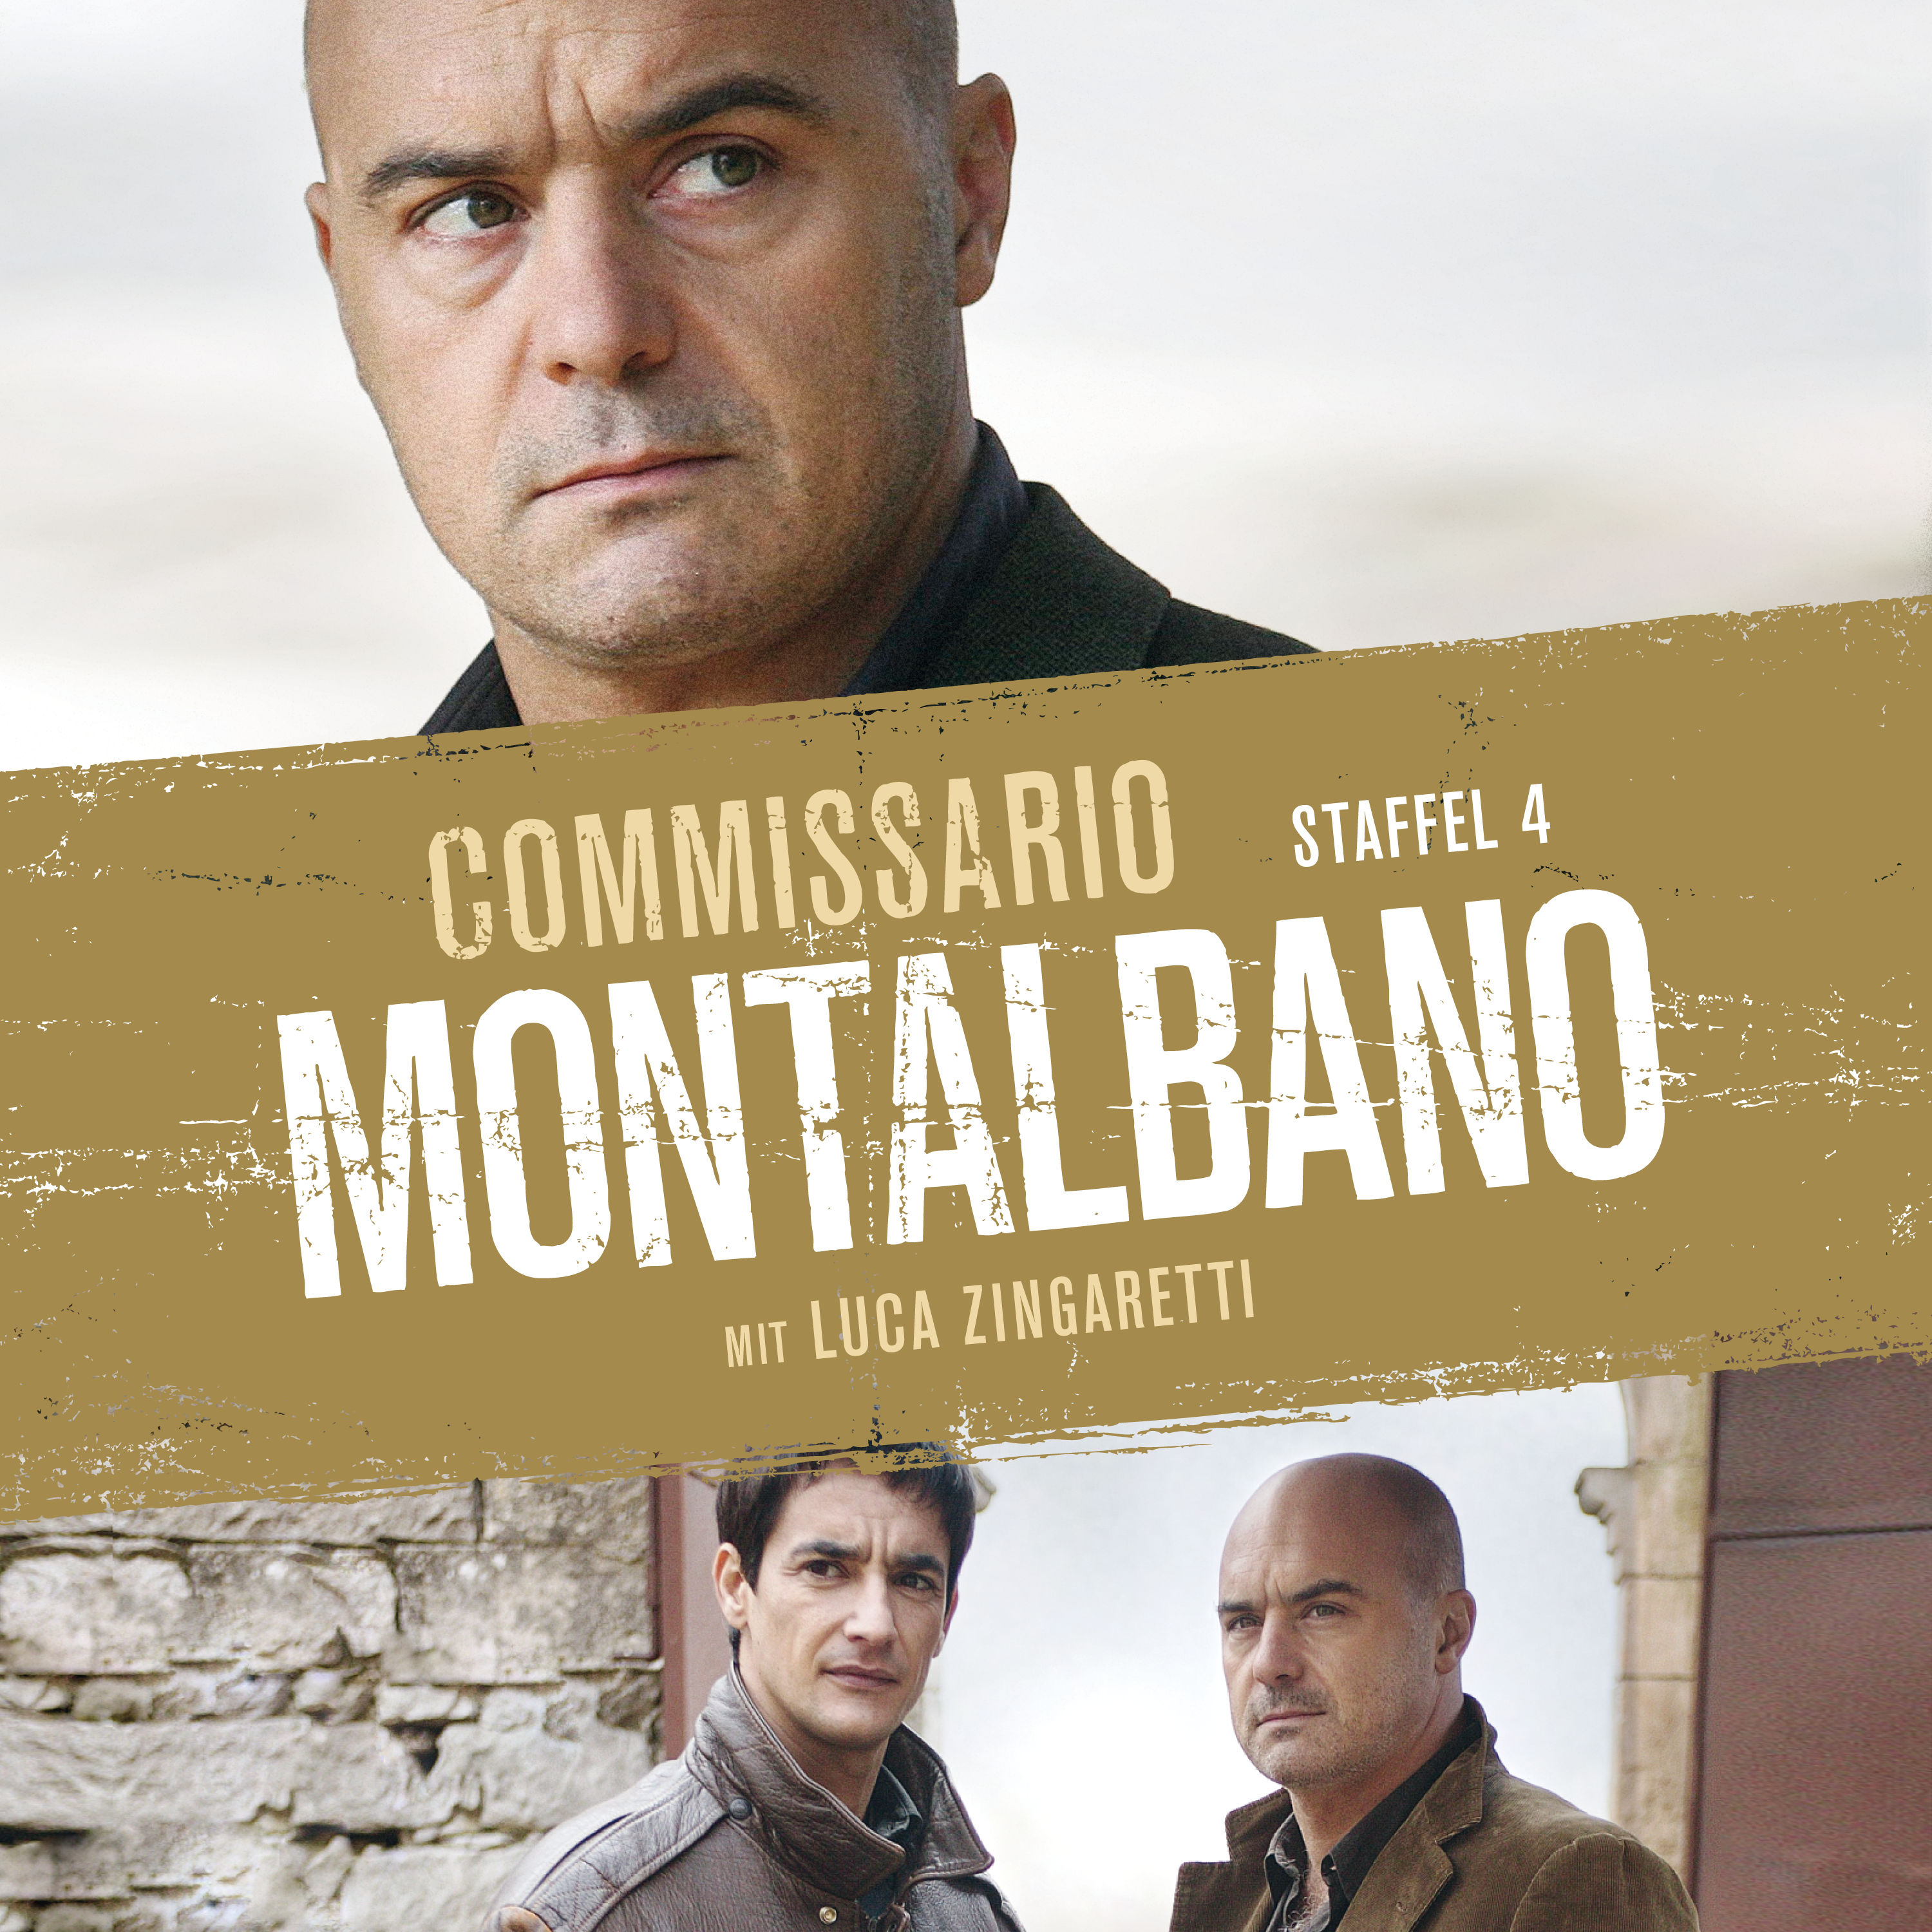 Commissario Montalbano (Staffel 4)